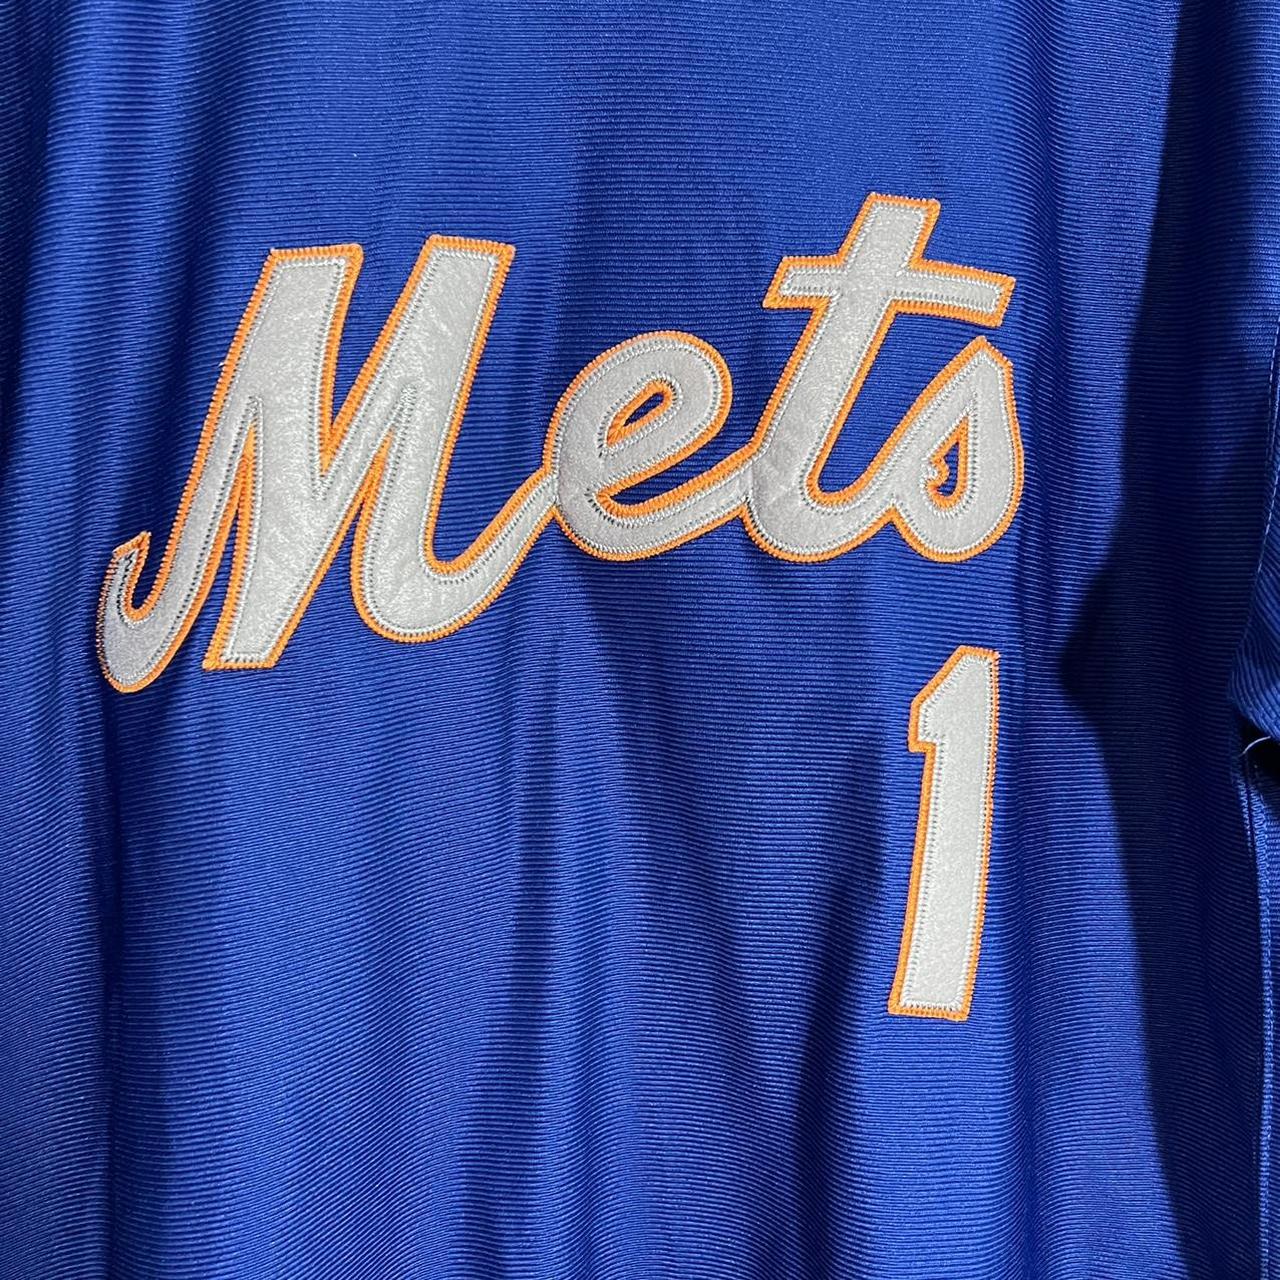 Mitchell & Ness, Shirts, New York Mets Throwback Mookie Wilson Jersey